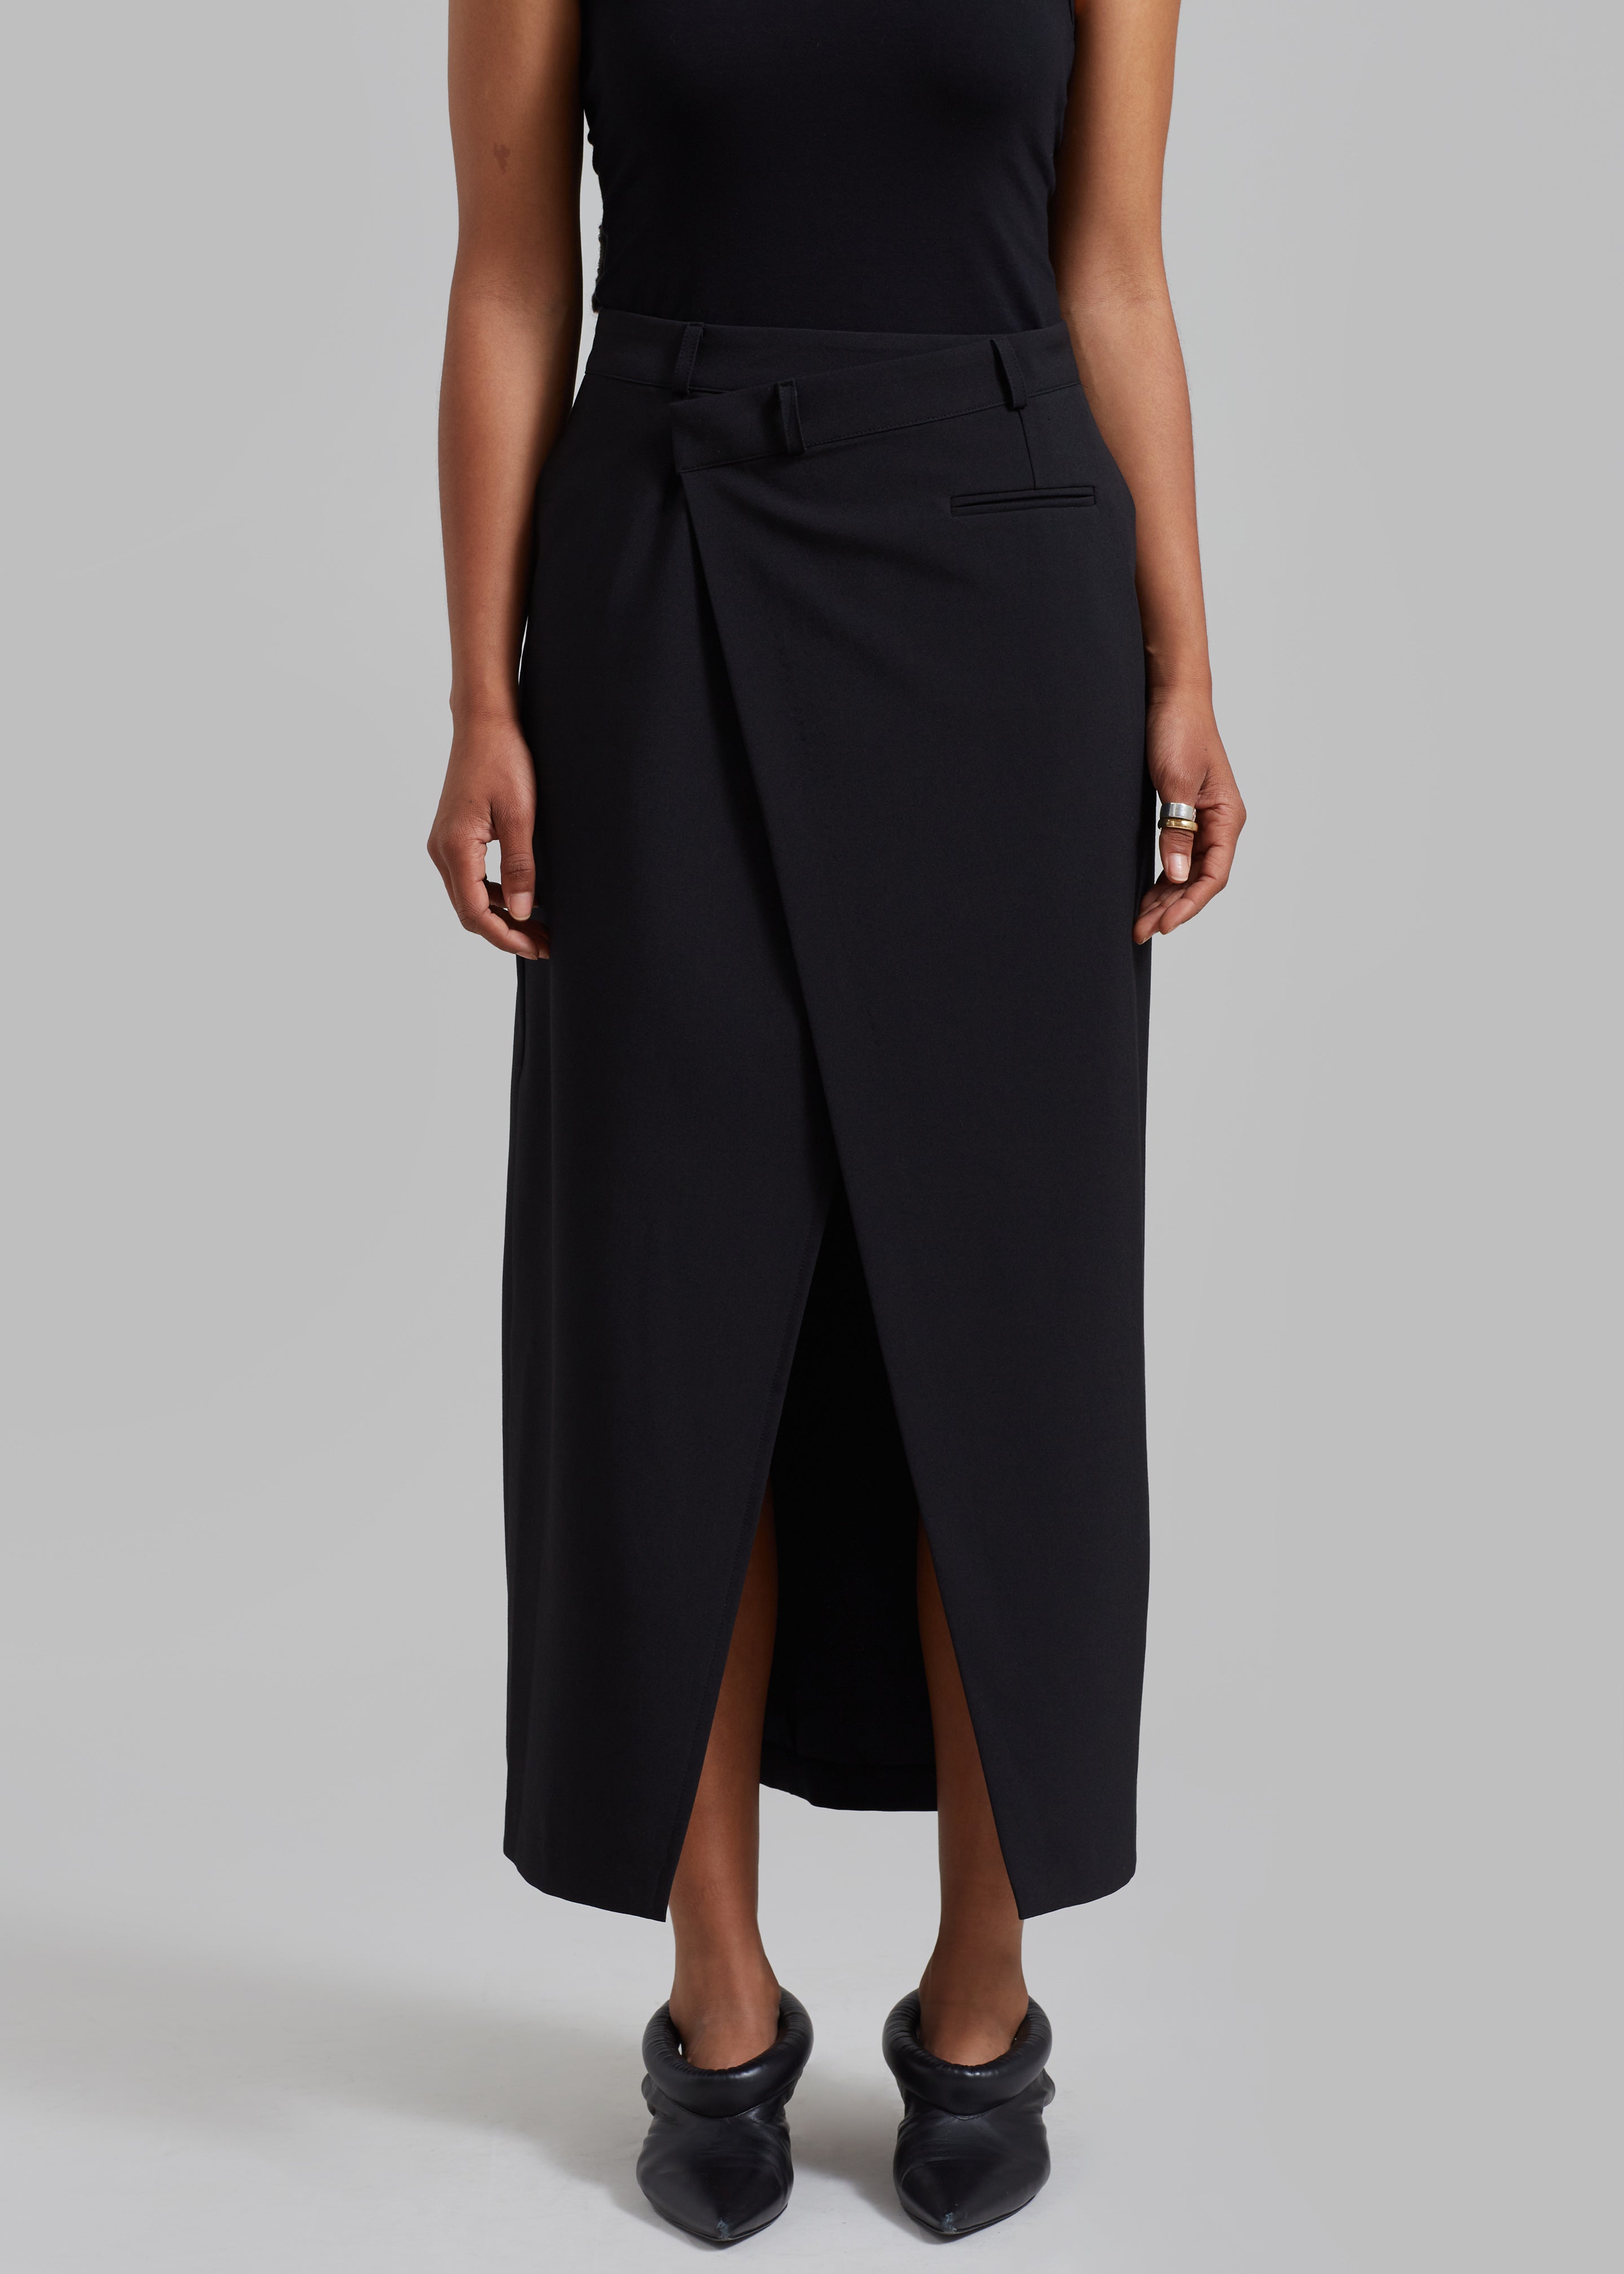 Annabel Asymmetric Midi Skirt - Black - 4